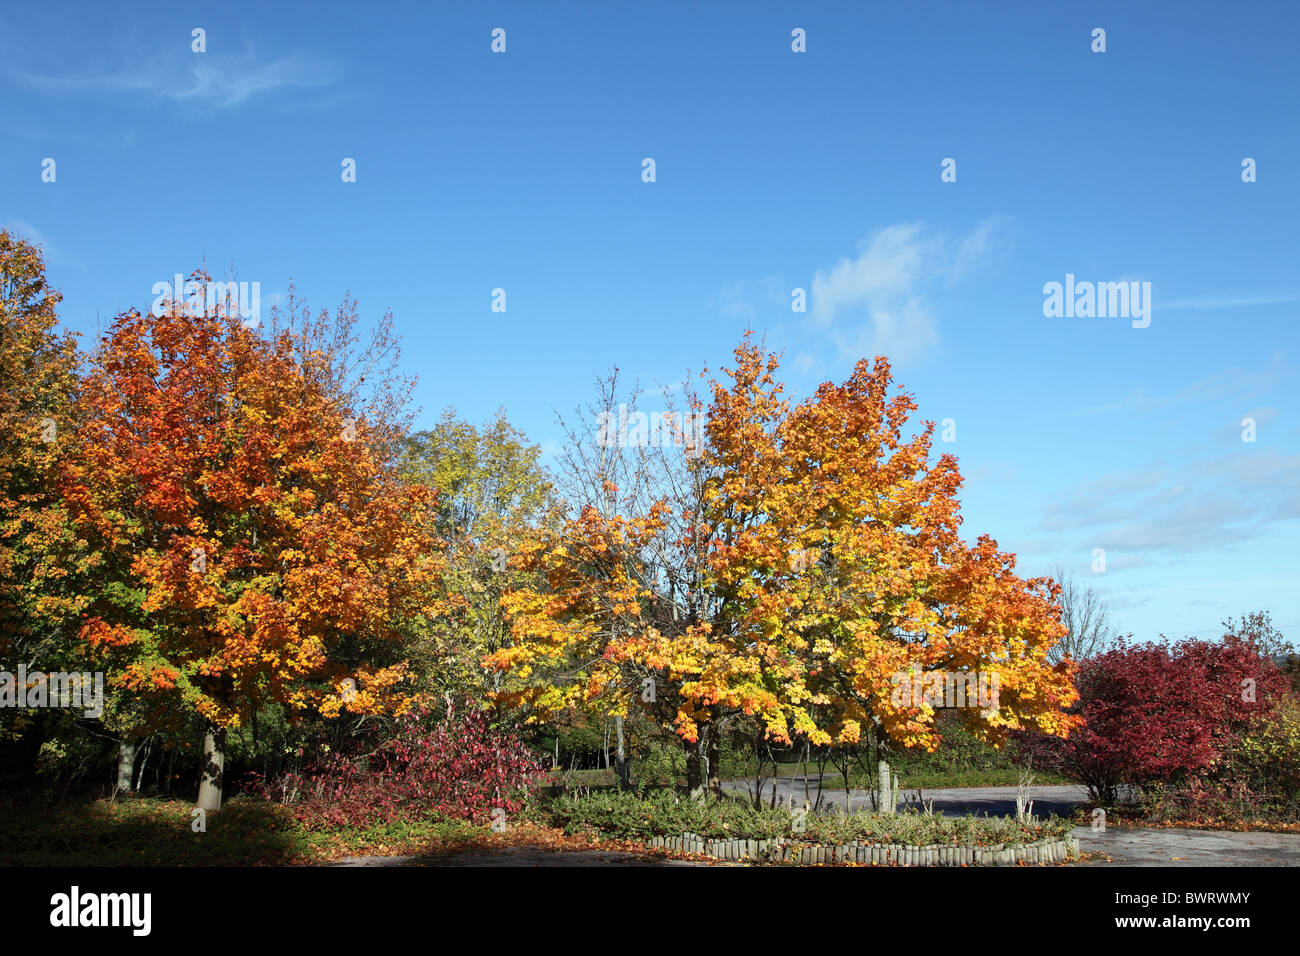 Bäume im Herbst Farbe gehüllt. Stockfoto